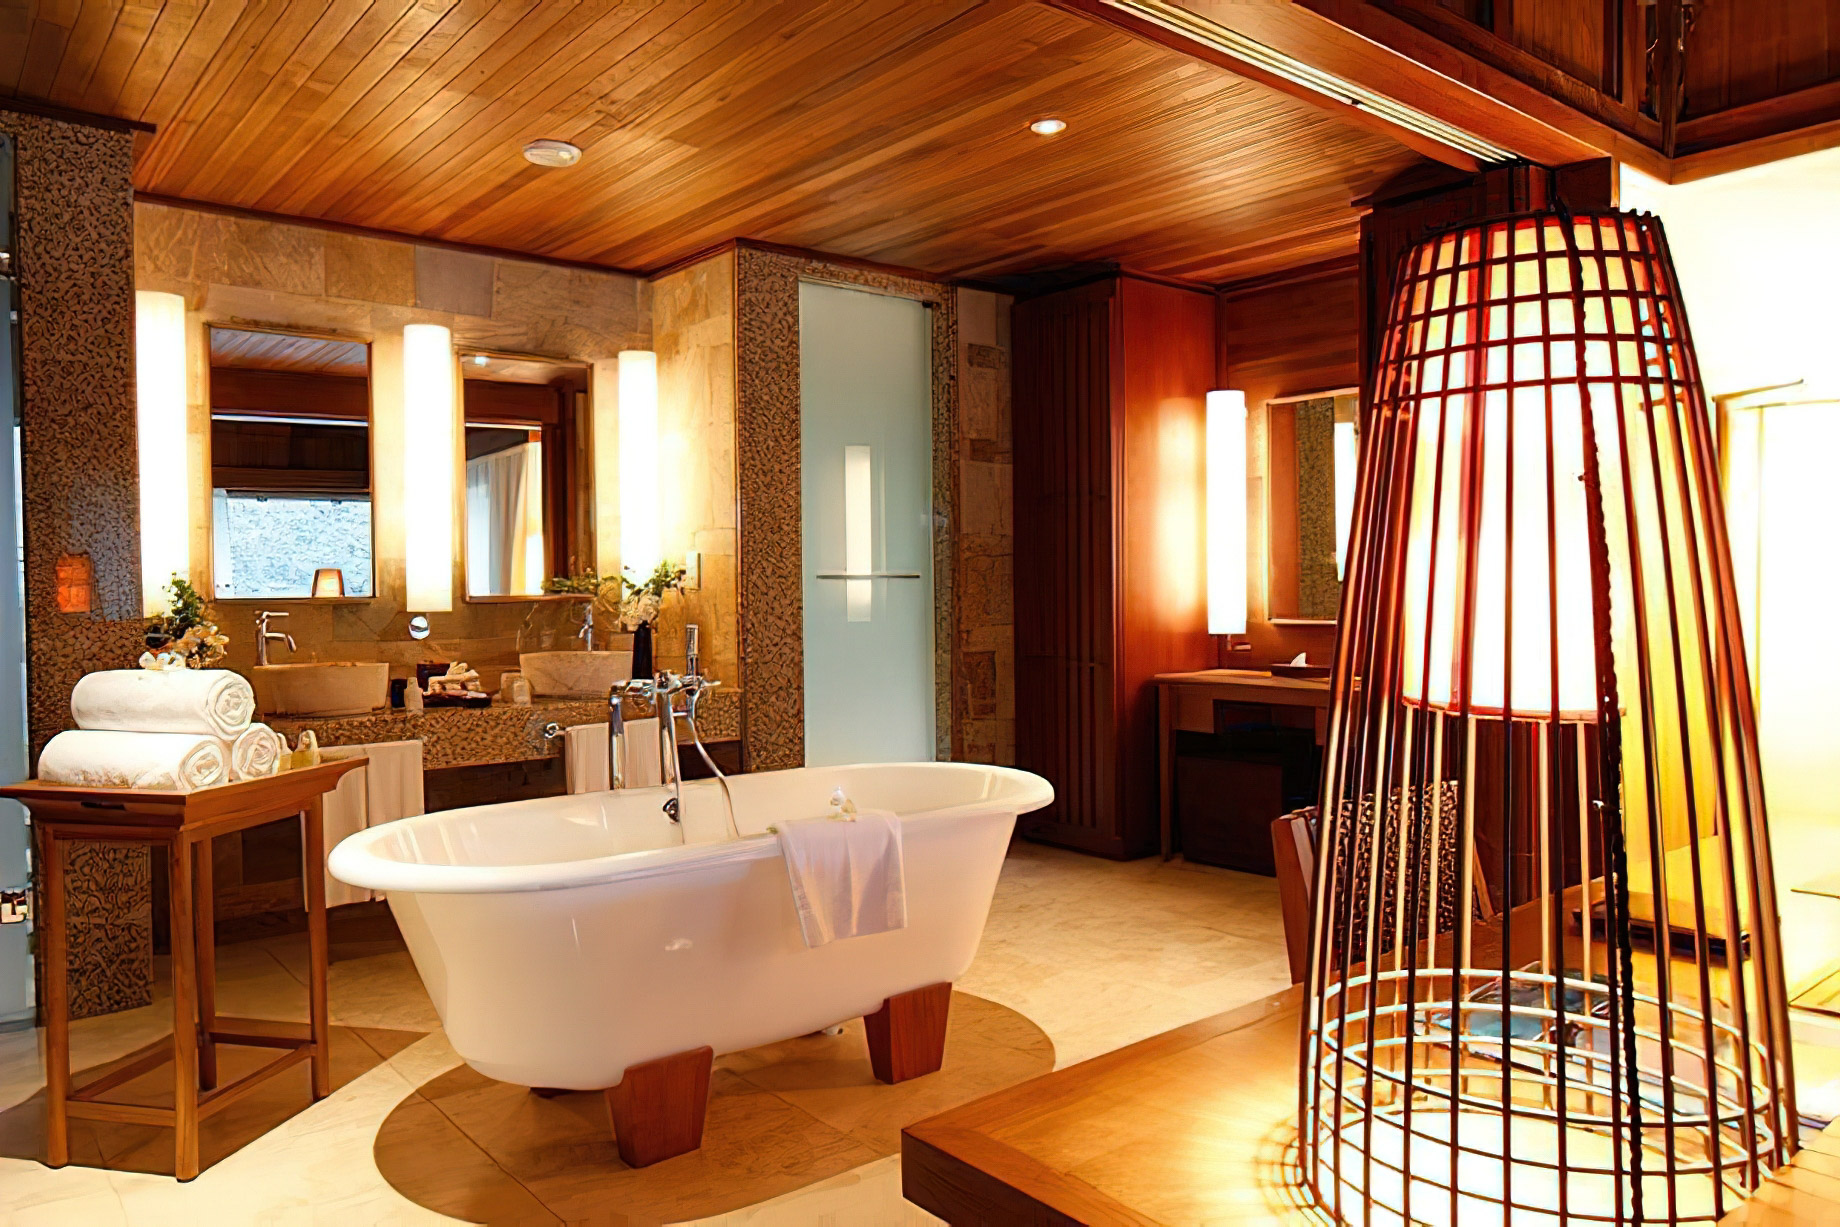 Constance Ephelia Resort – Port Launay, Mahe, Seychelles – Hillside Villa Bathroom